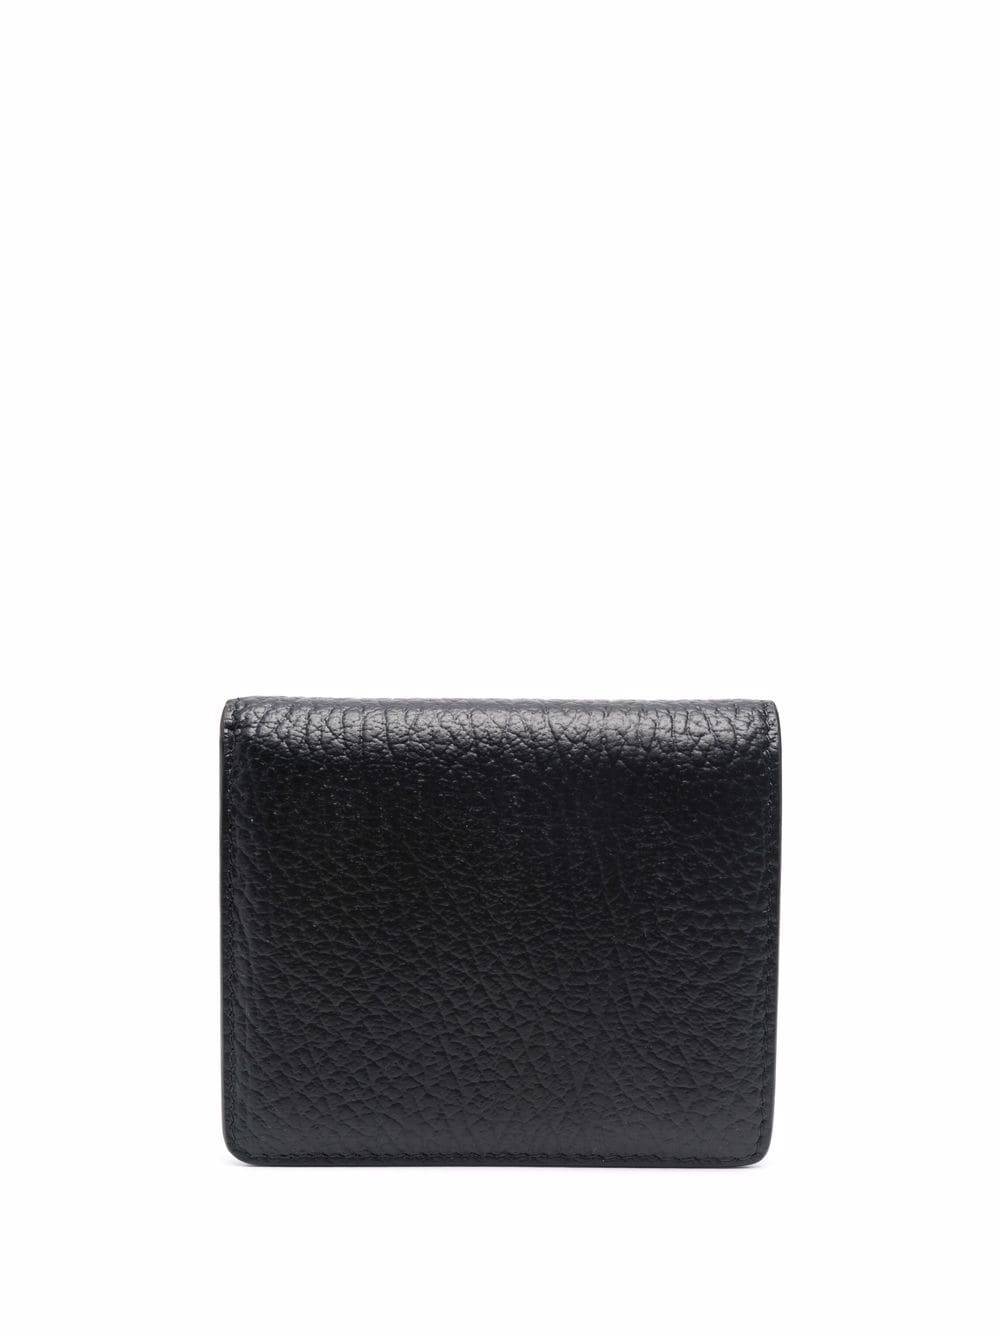 MAISON MARGIELA Black Pebbled Leather Bi-fold Wallet for Women